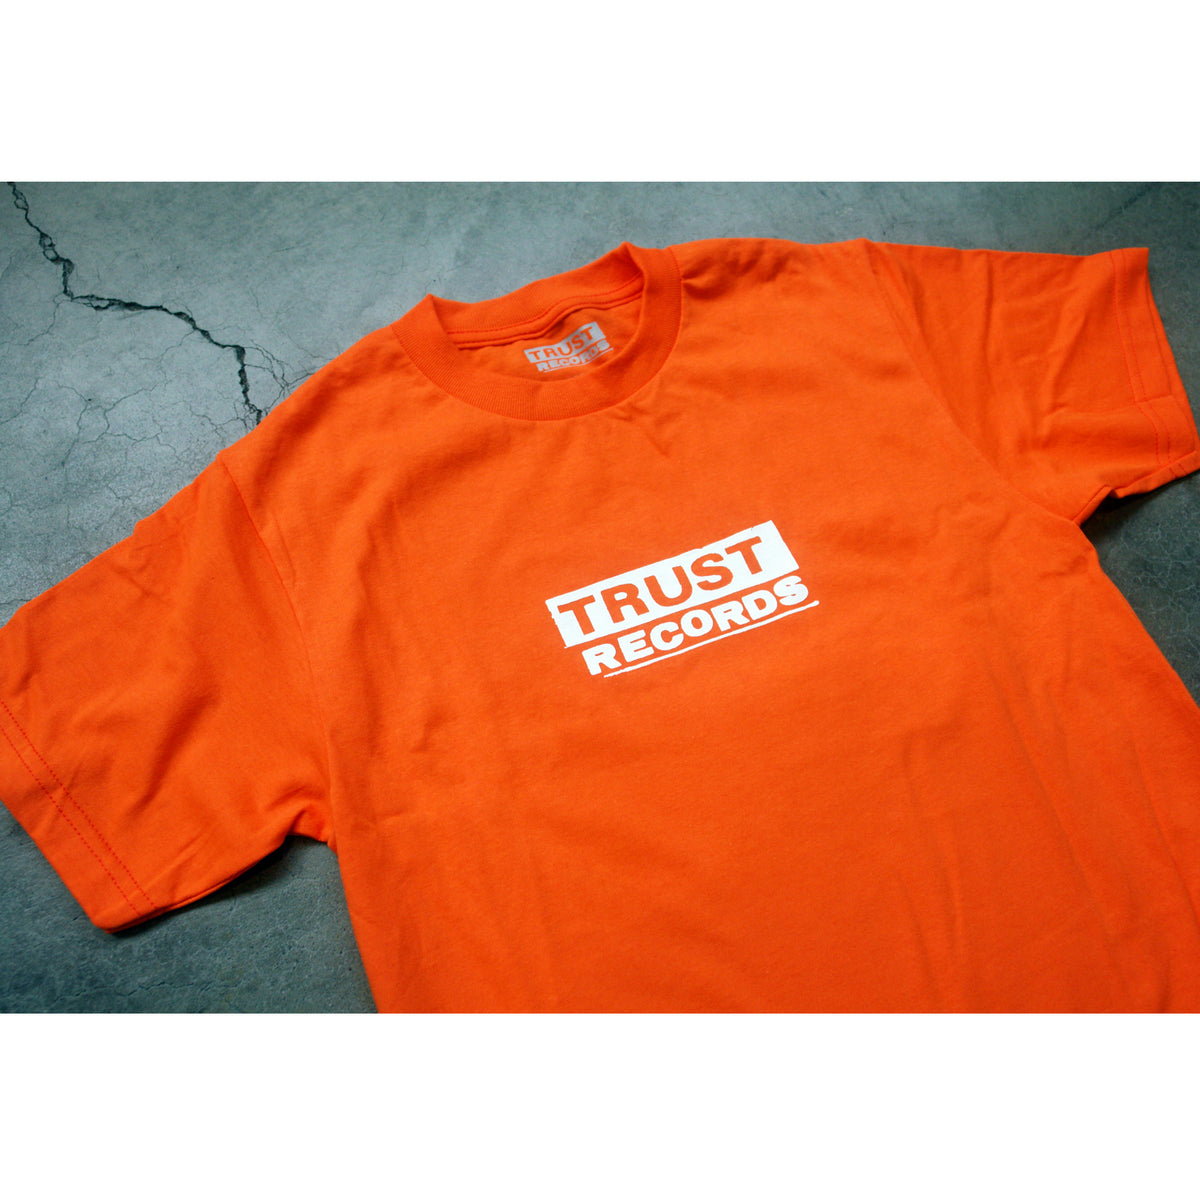 Trust Records Logo Orange T-Shirt